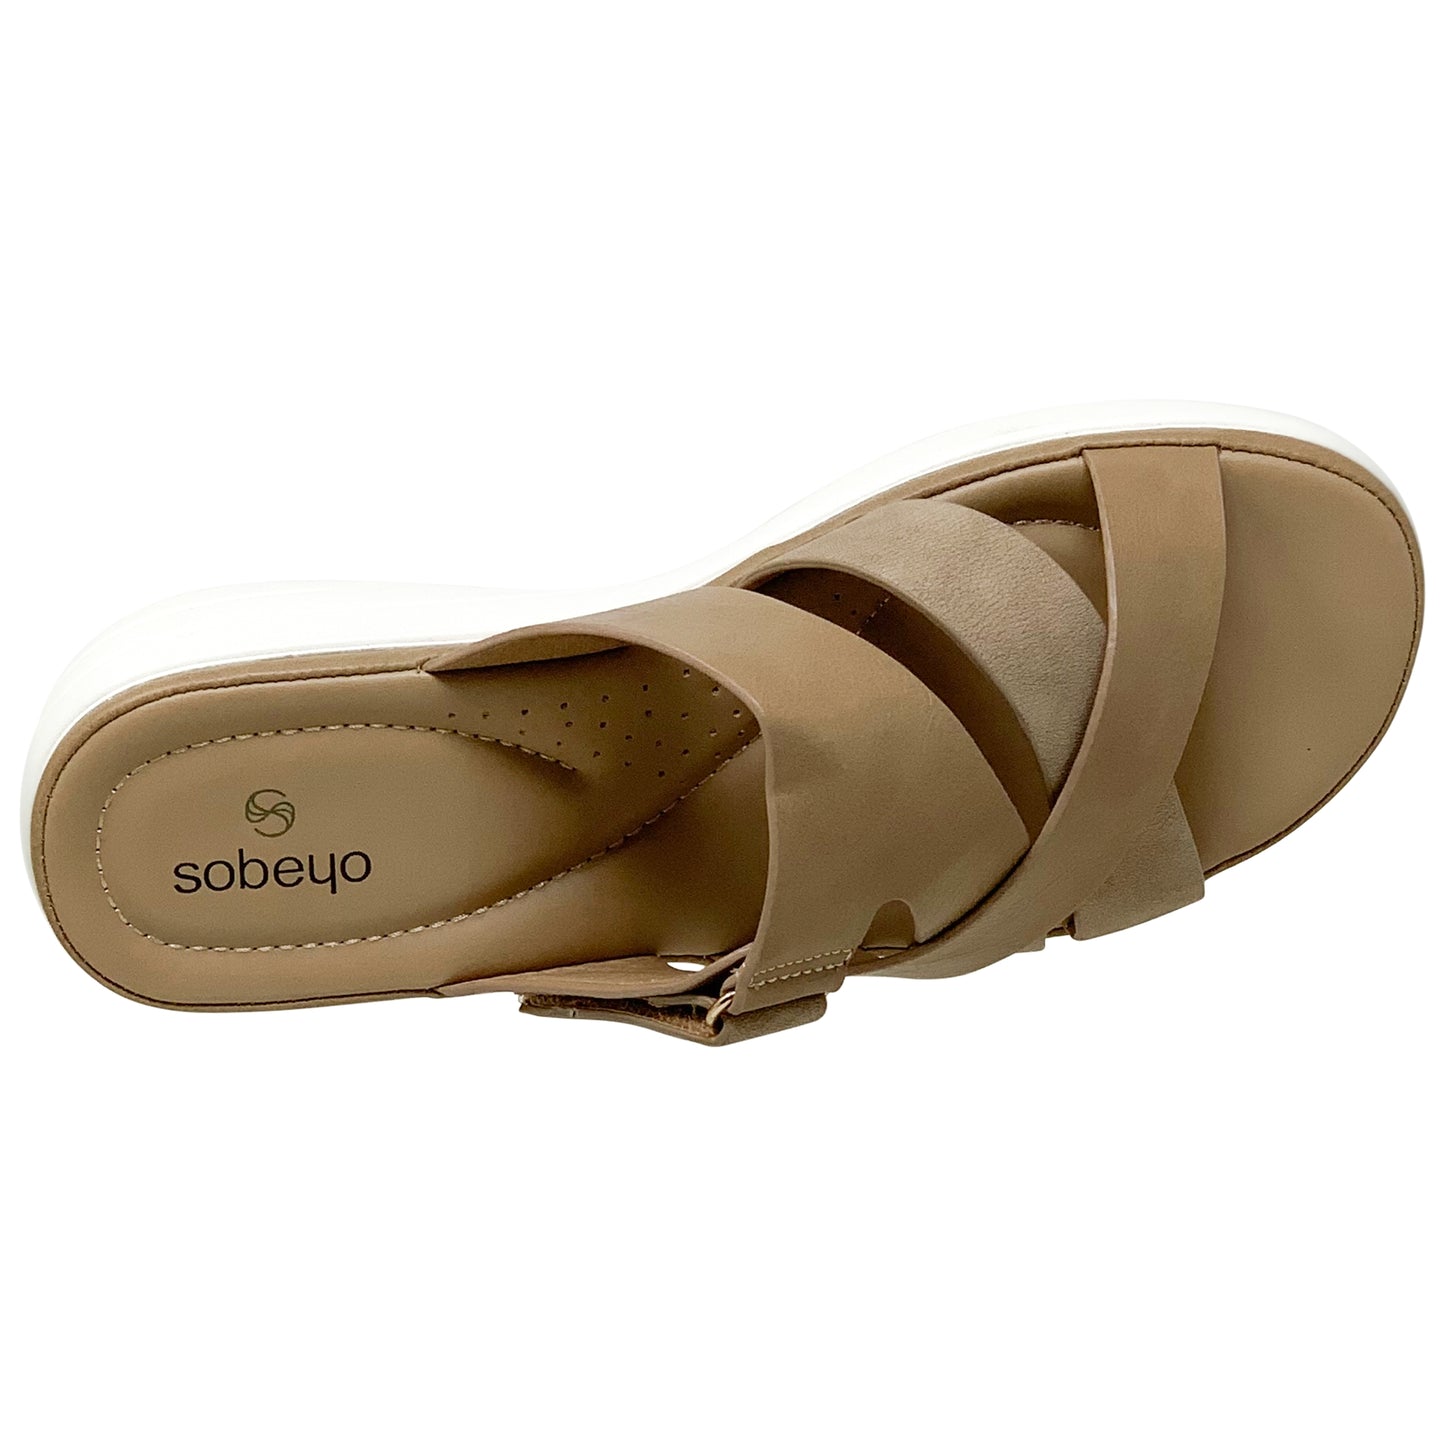 SOBEYO Strappy Buckle Platform Cushion Sandals Tan